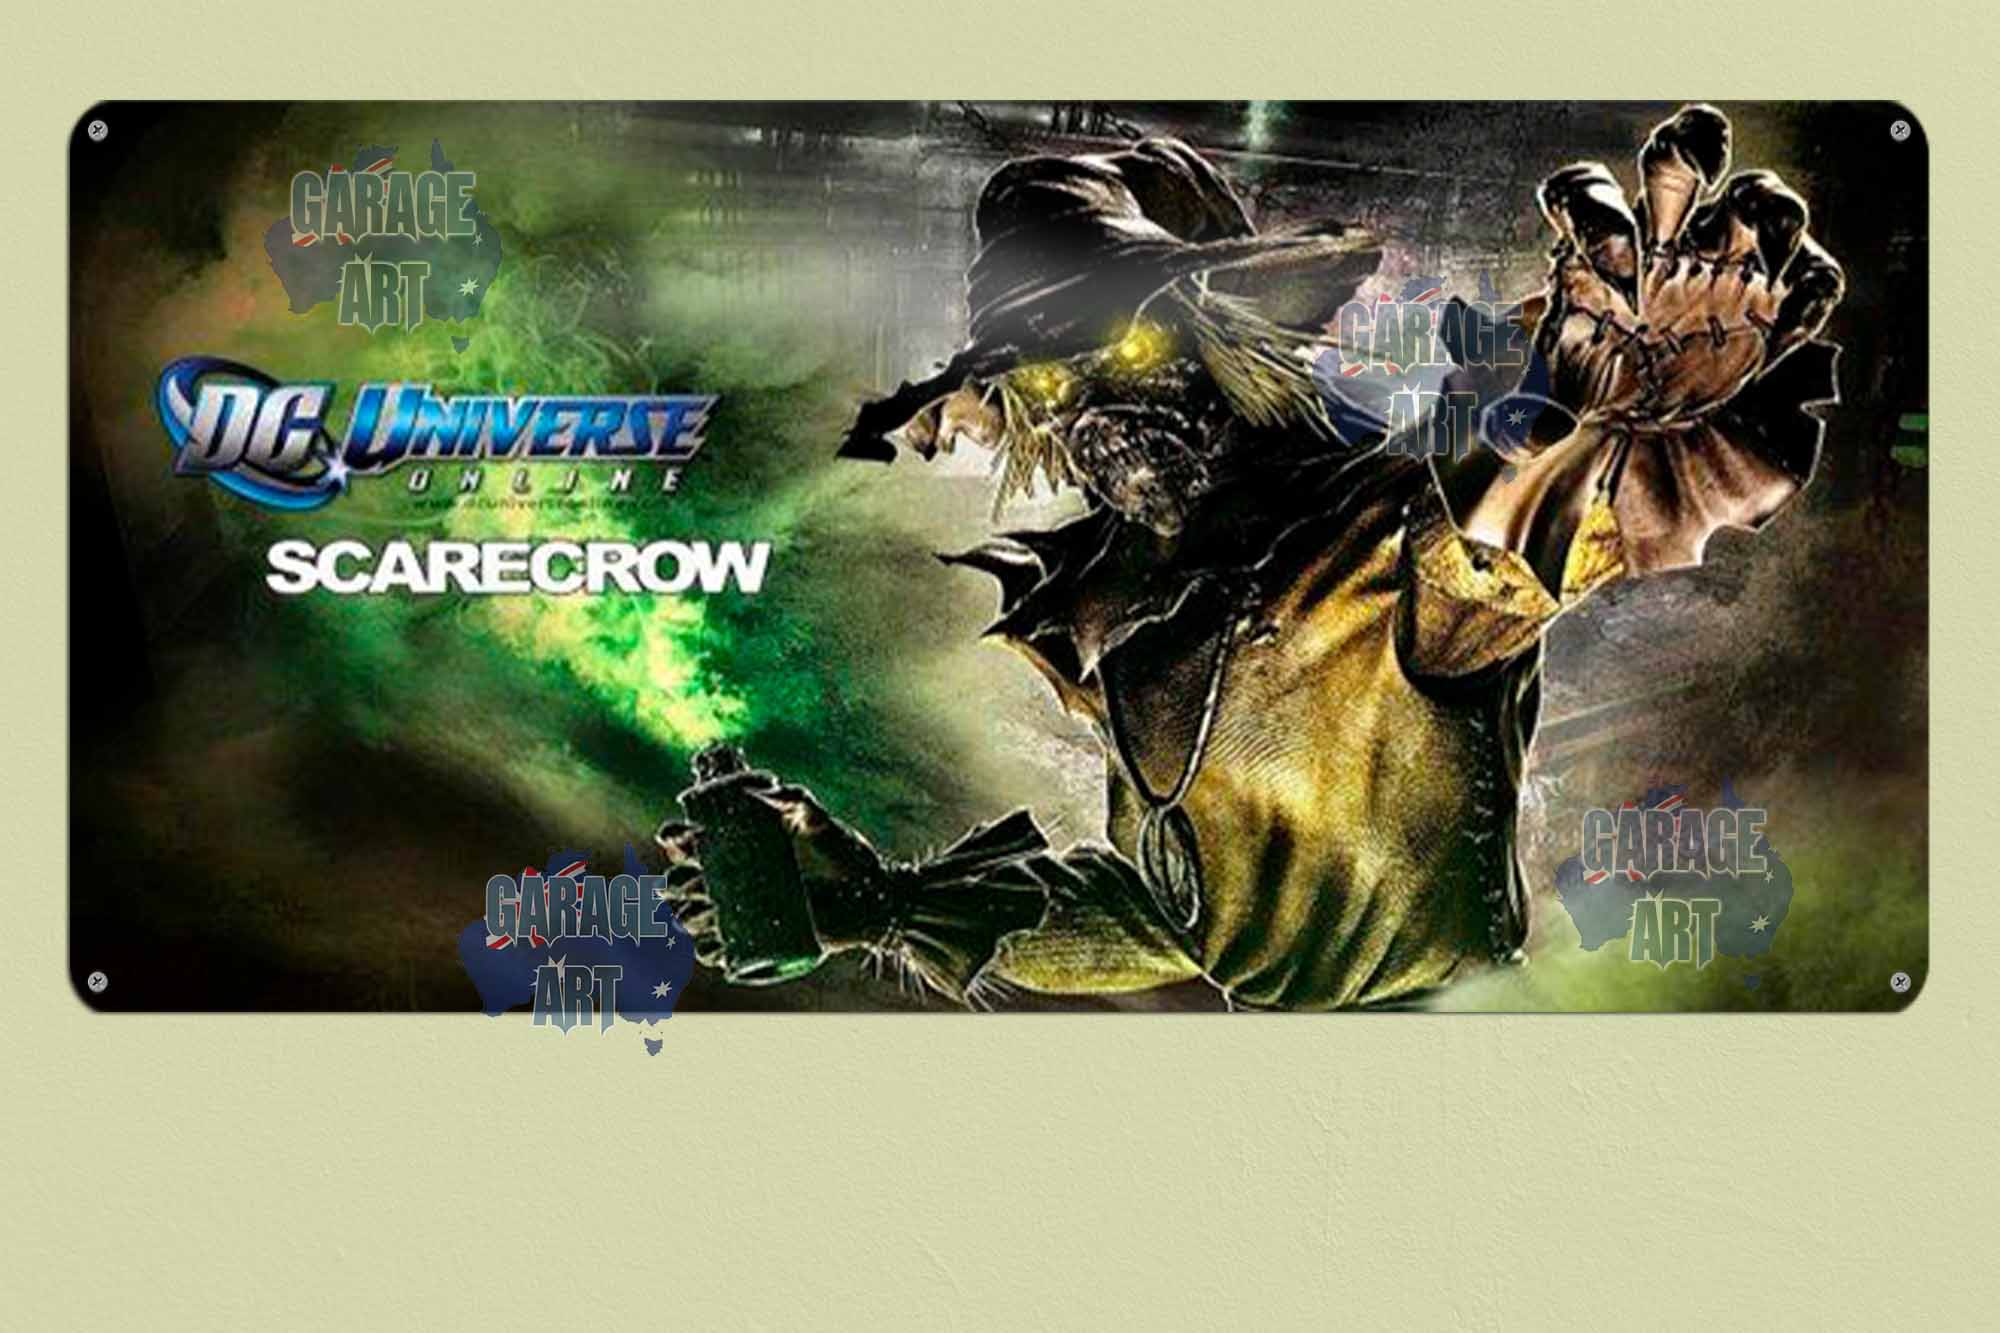 DC Universe Scarecrow 750mmx380mm Tin Sign freeshipping - garageartaustralia